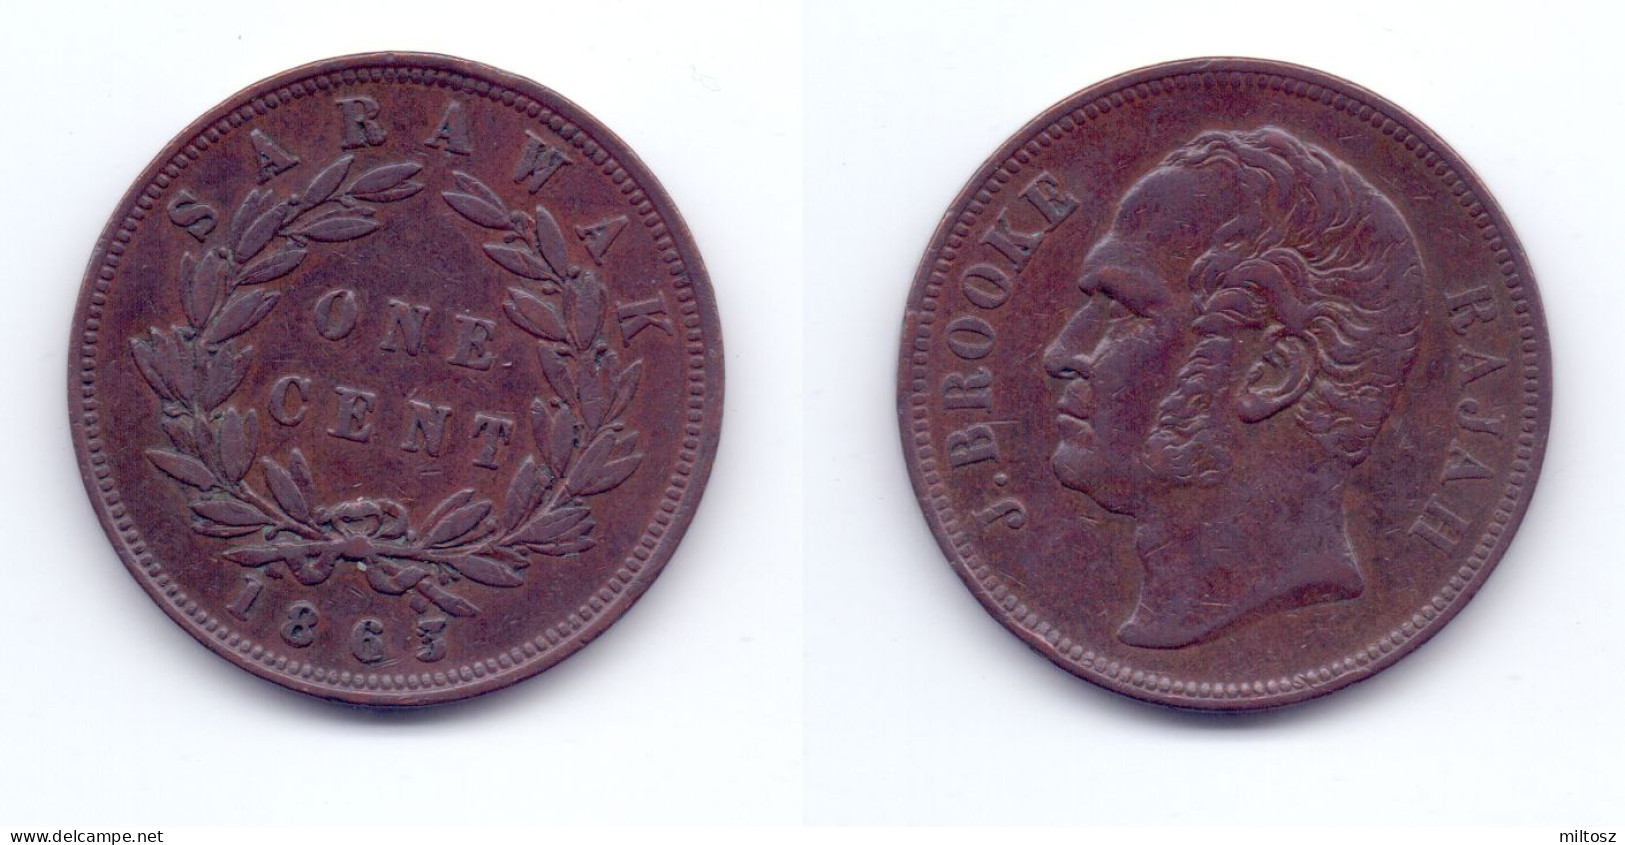 Sarawak 1 Cent 1863 - Maleisië